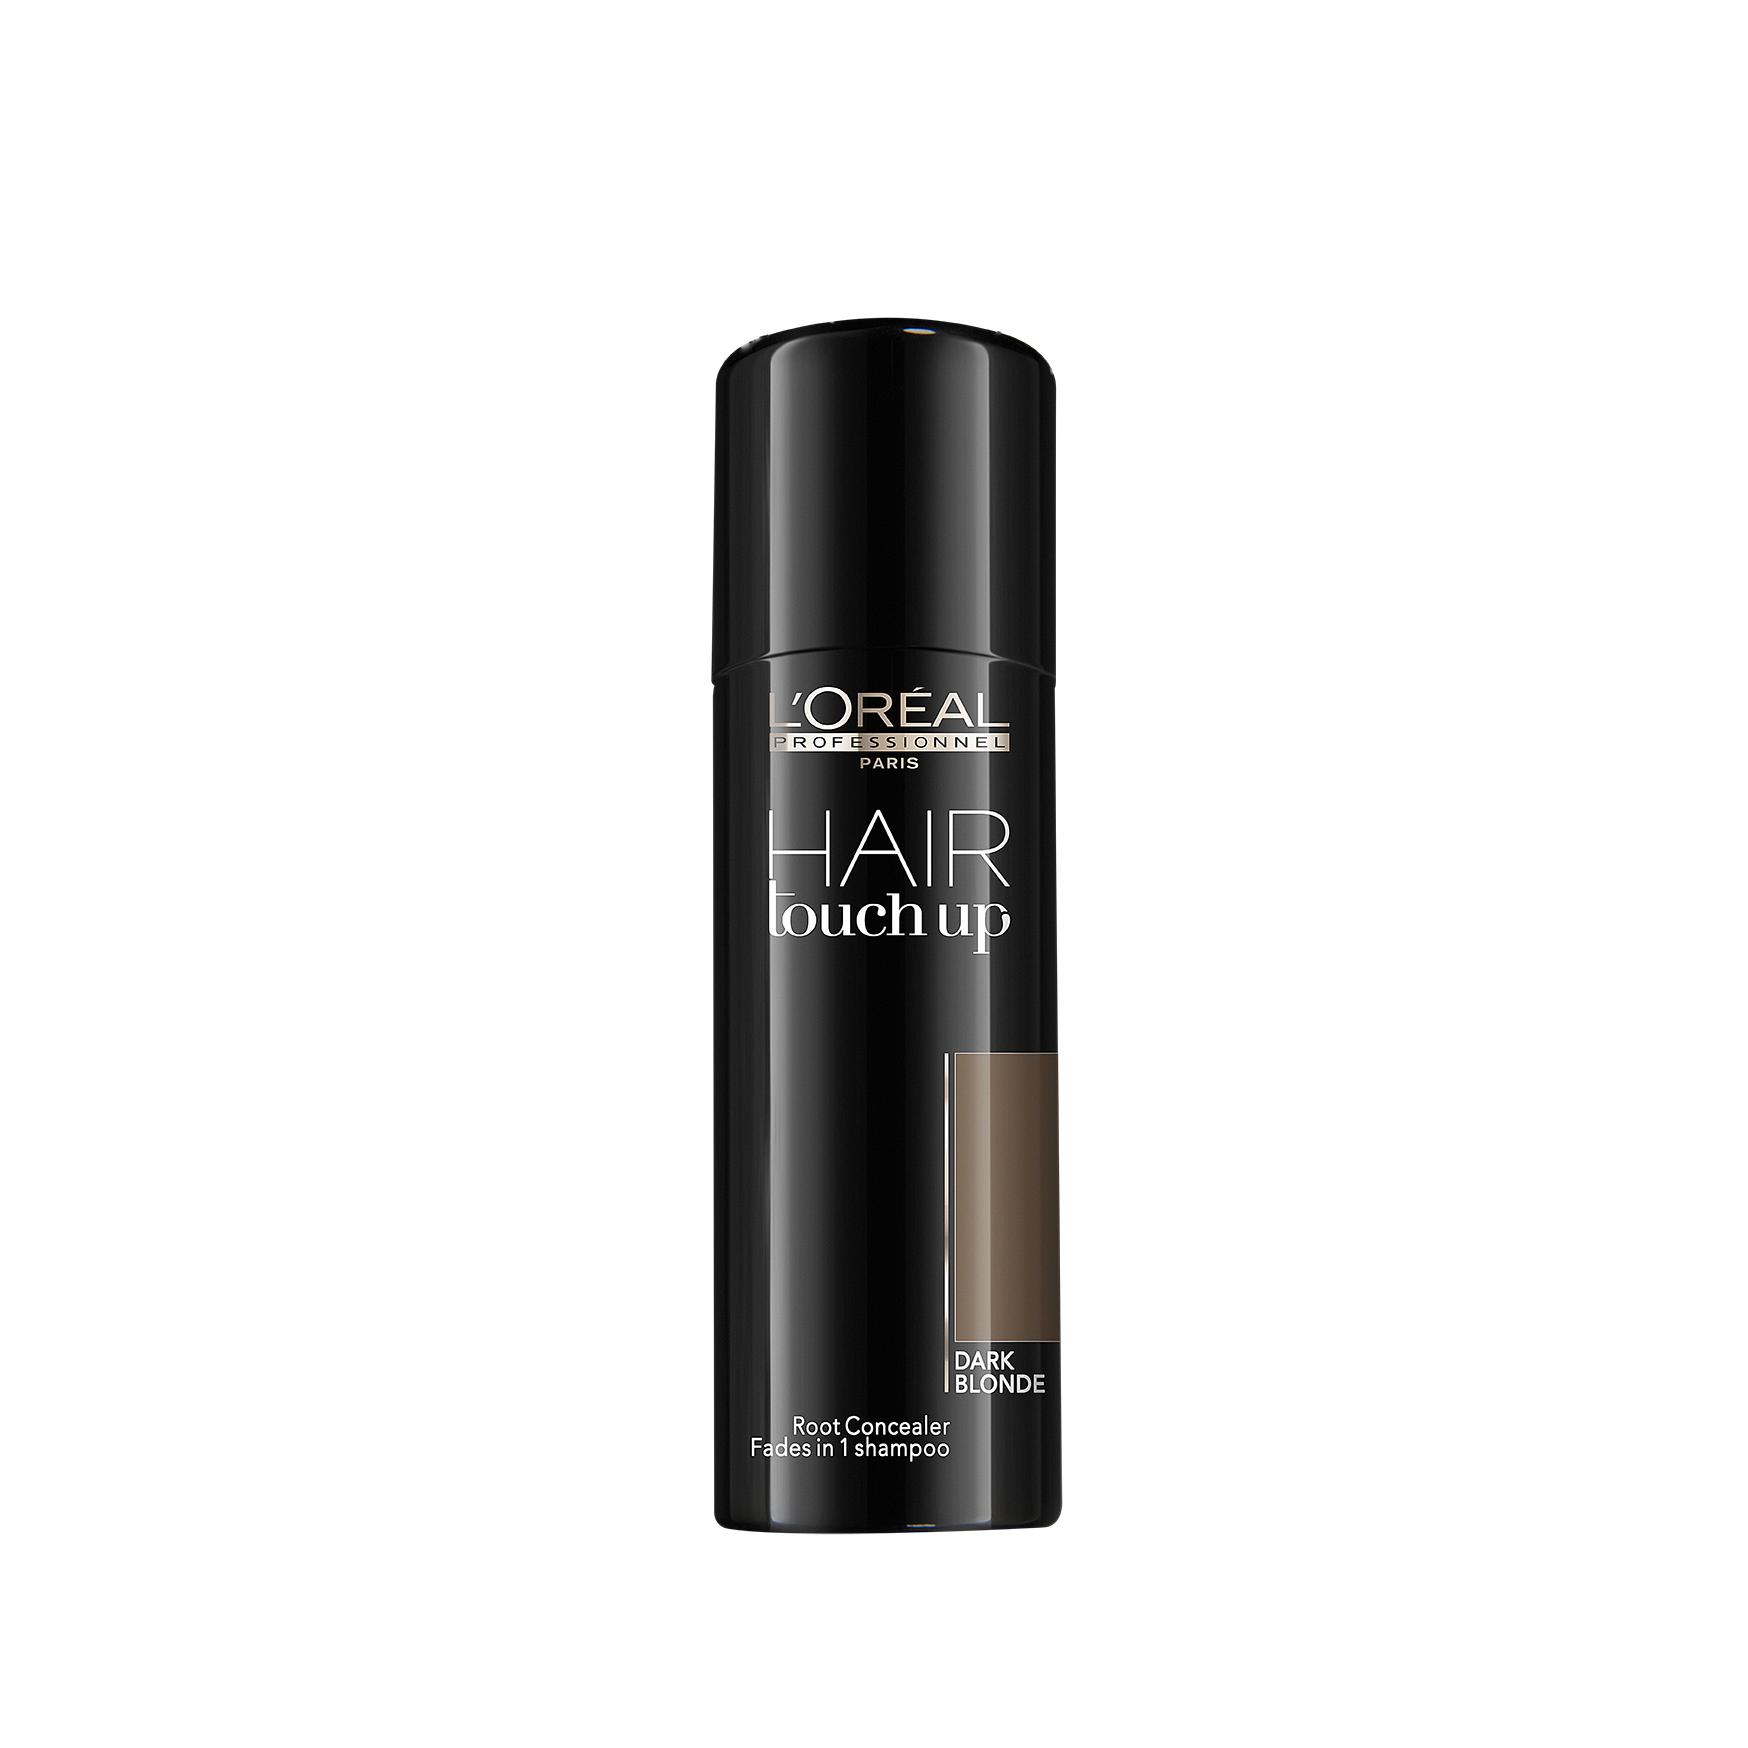 L'Oréal HAIR Touch up